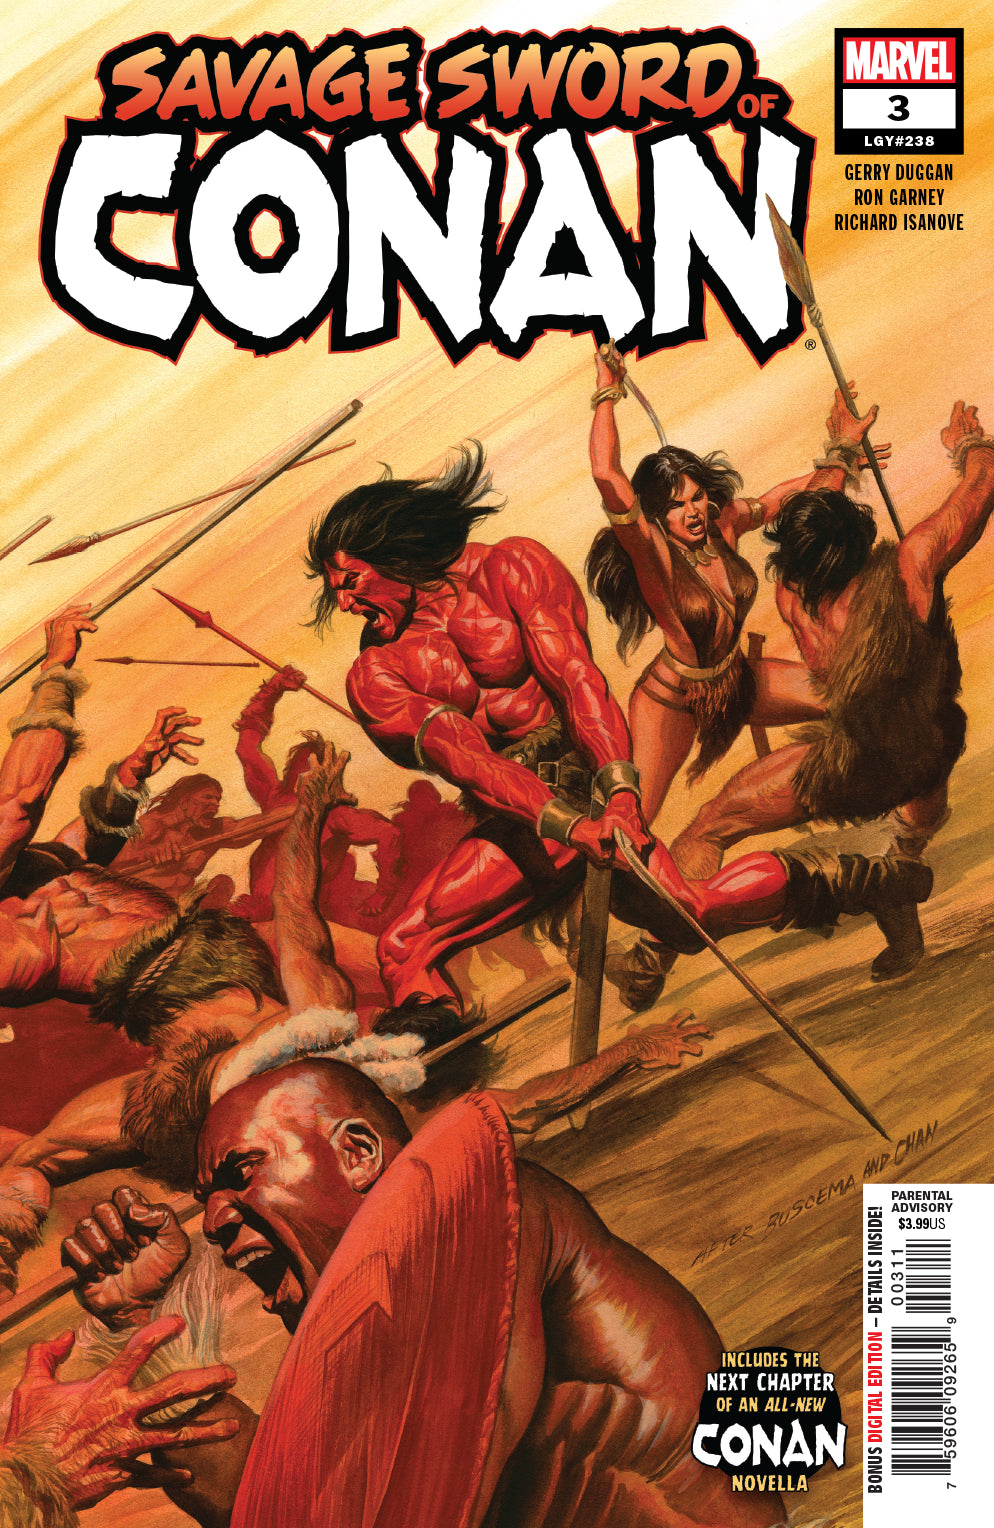 SAVAGE SWORD OF CONAN #3 COVER